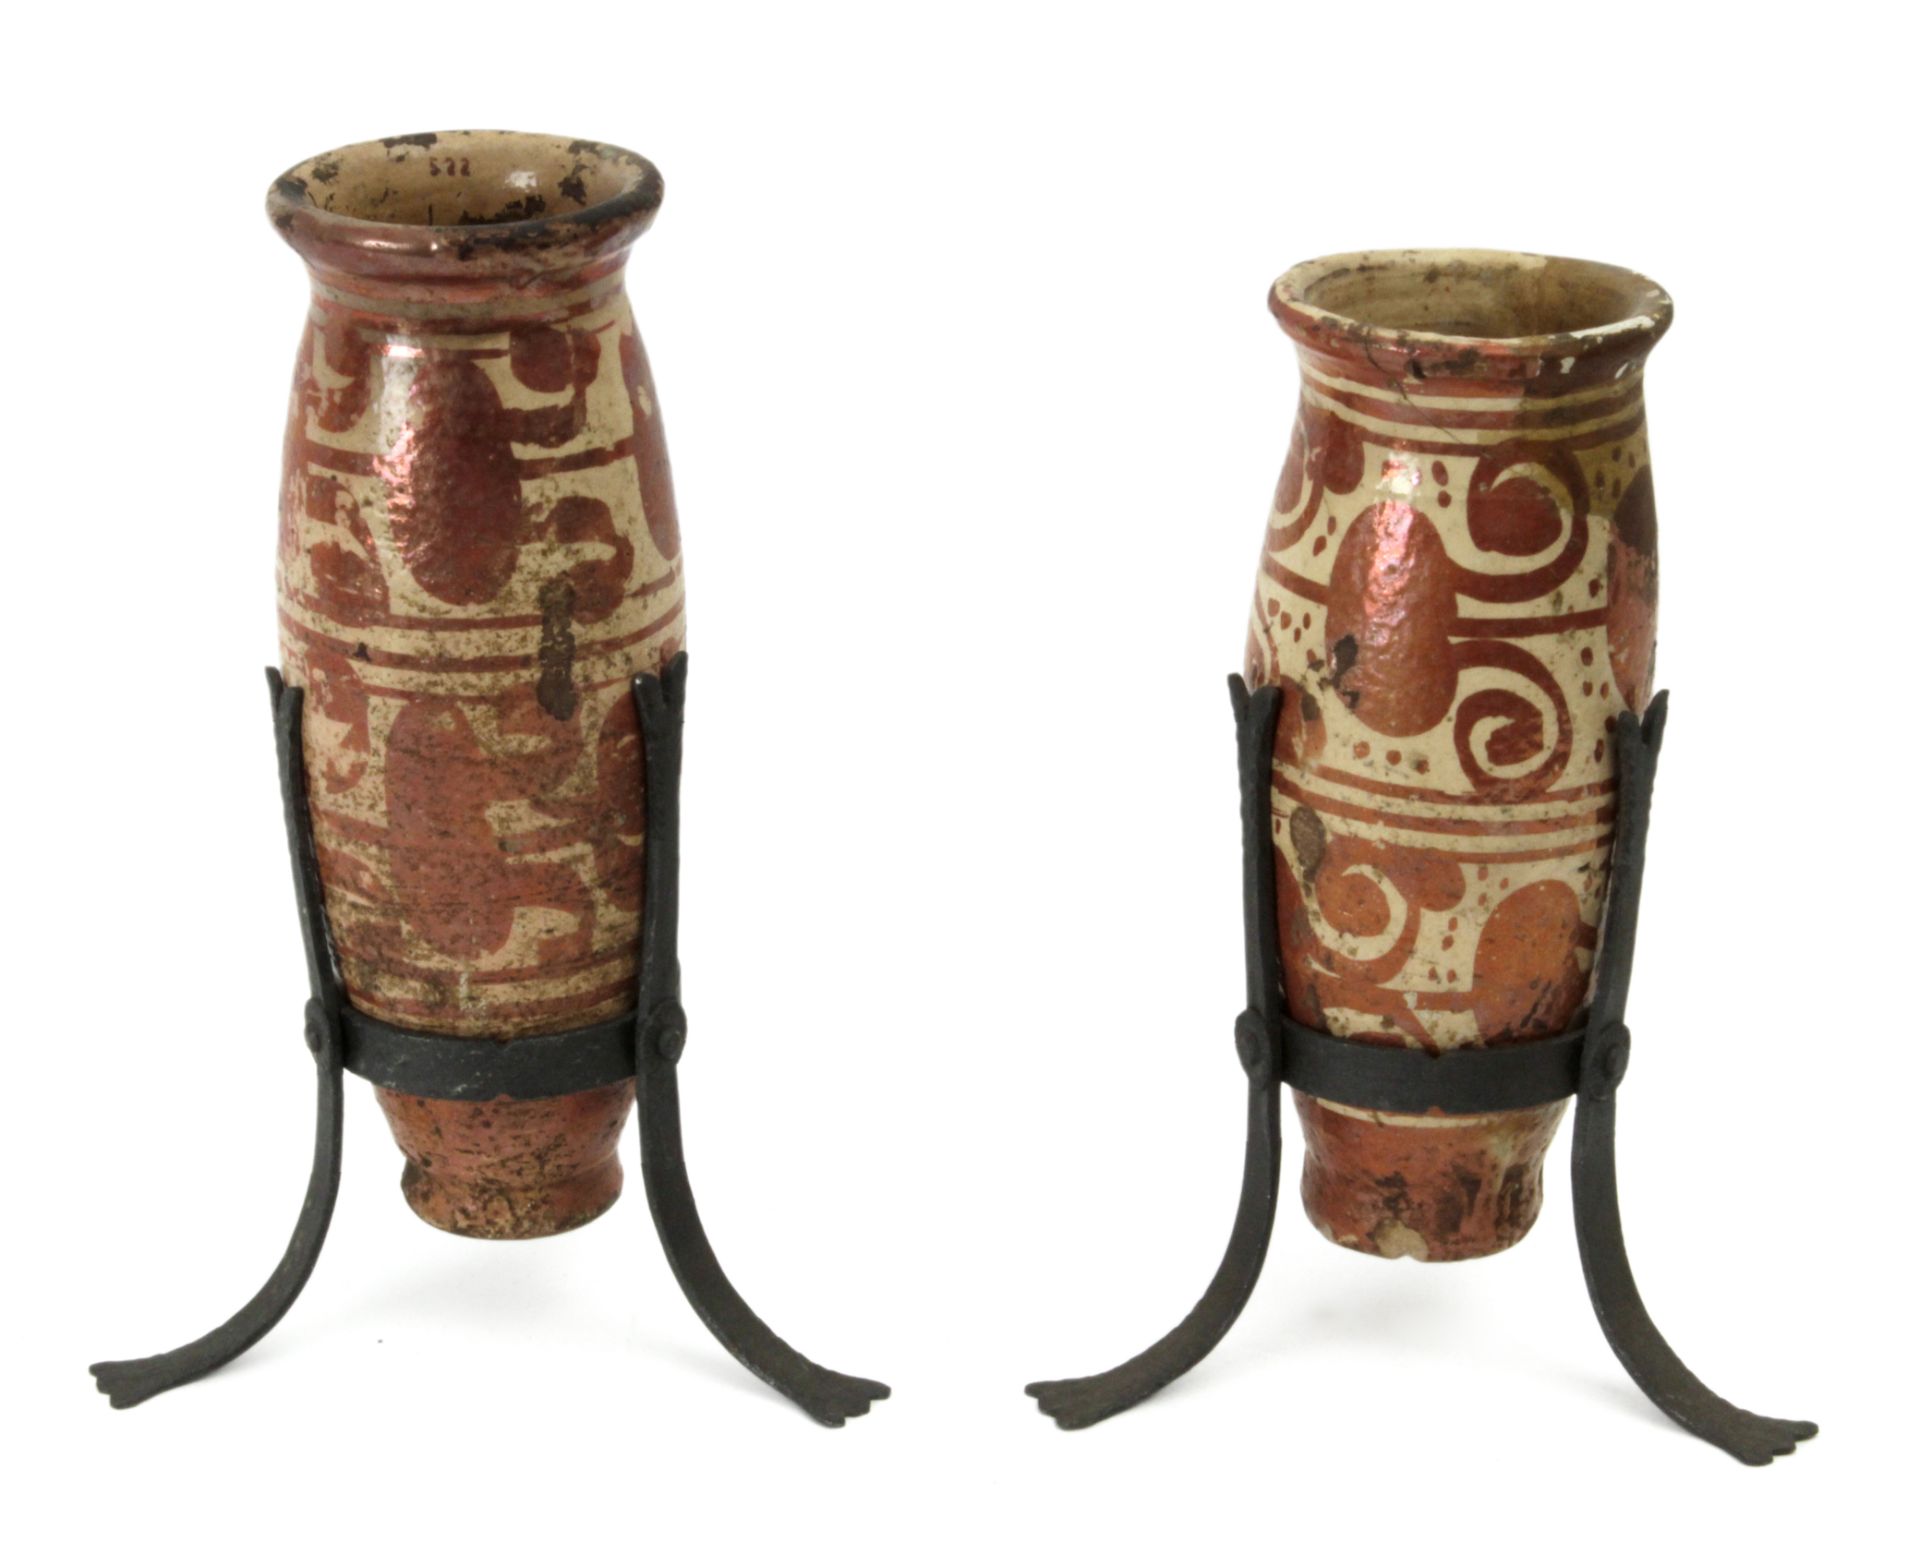 Pair of 18th century honey pots in Manises tin-glazed pottery